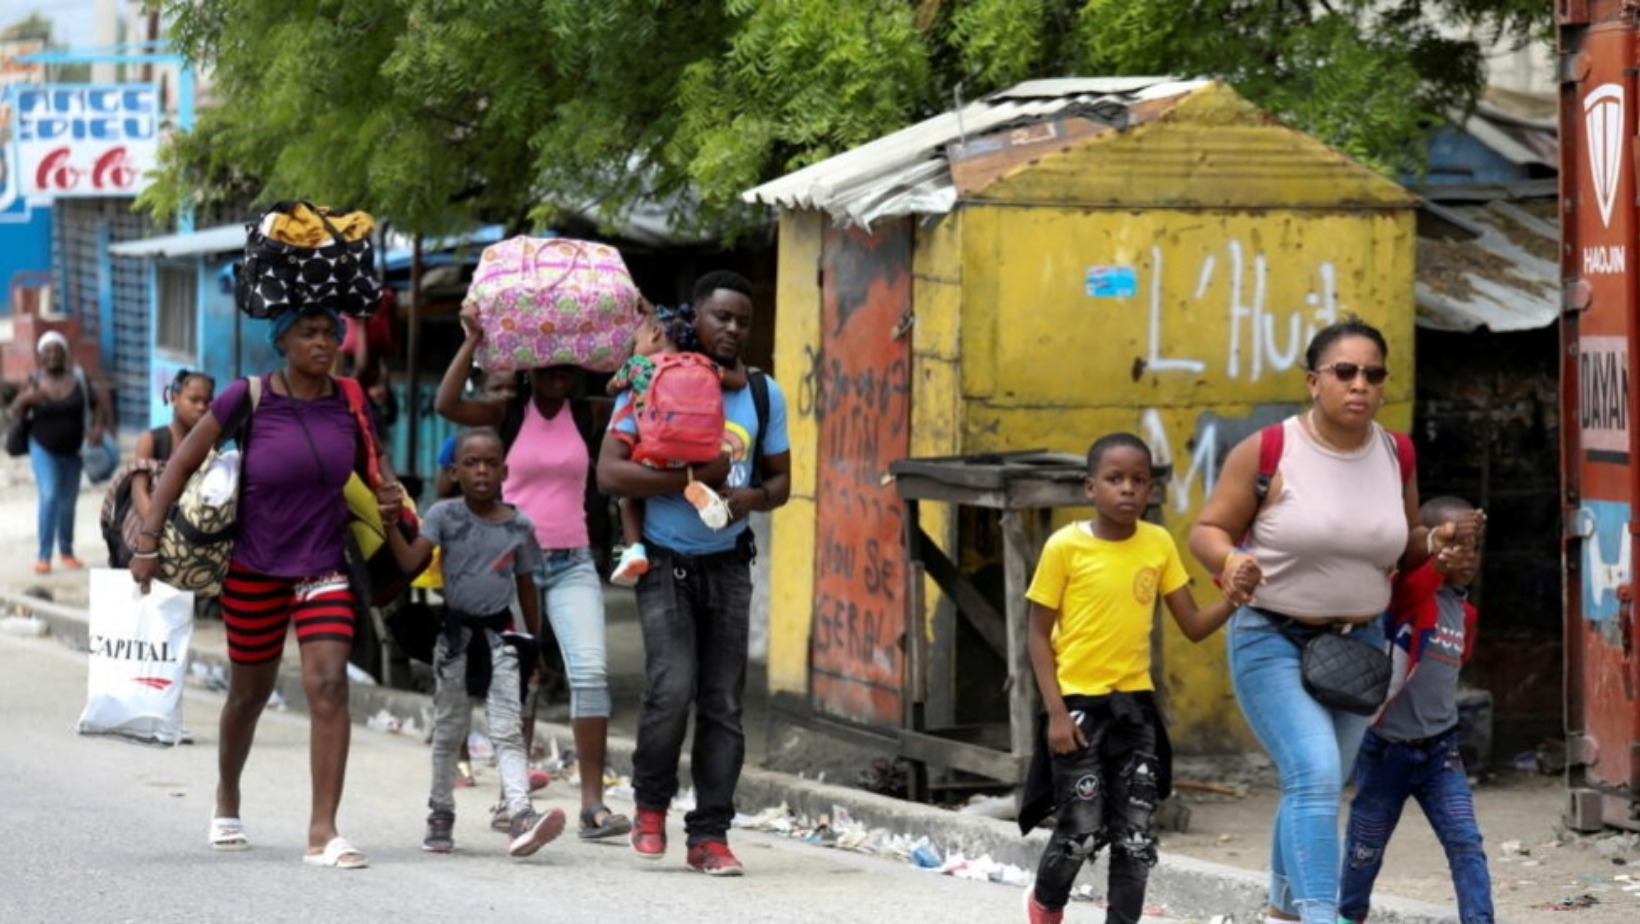 Haití ha vivido semanas de caos provocado por las bandas. (Foto: Fuente externa)